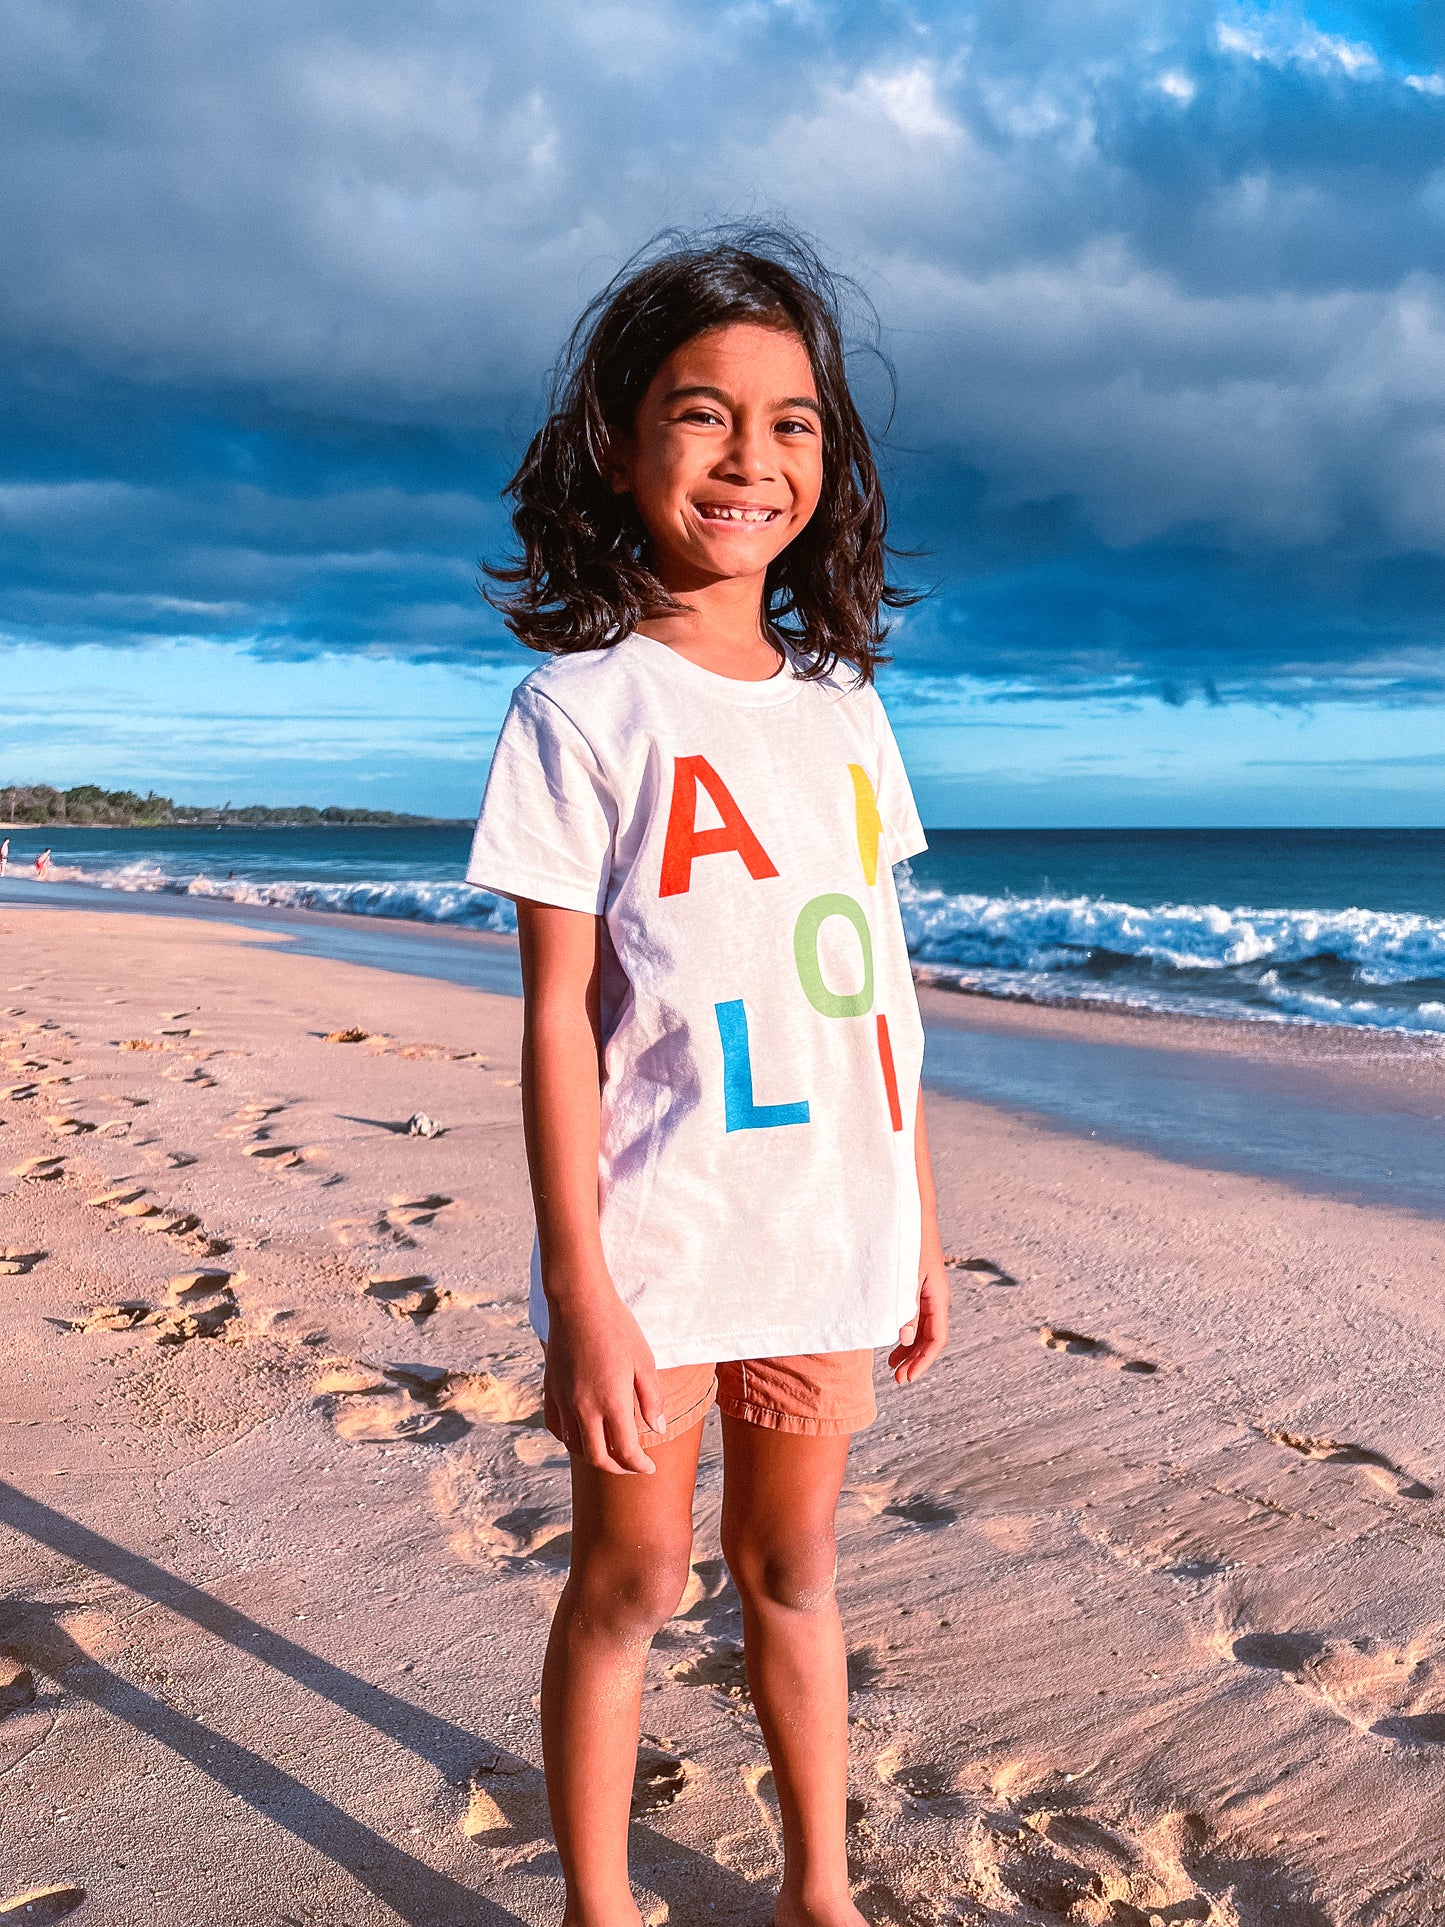 Aloha Friyay Toddler T-shirt